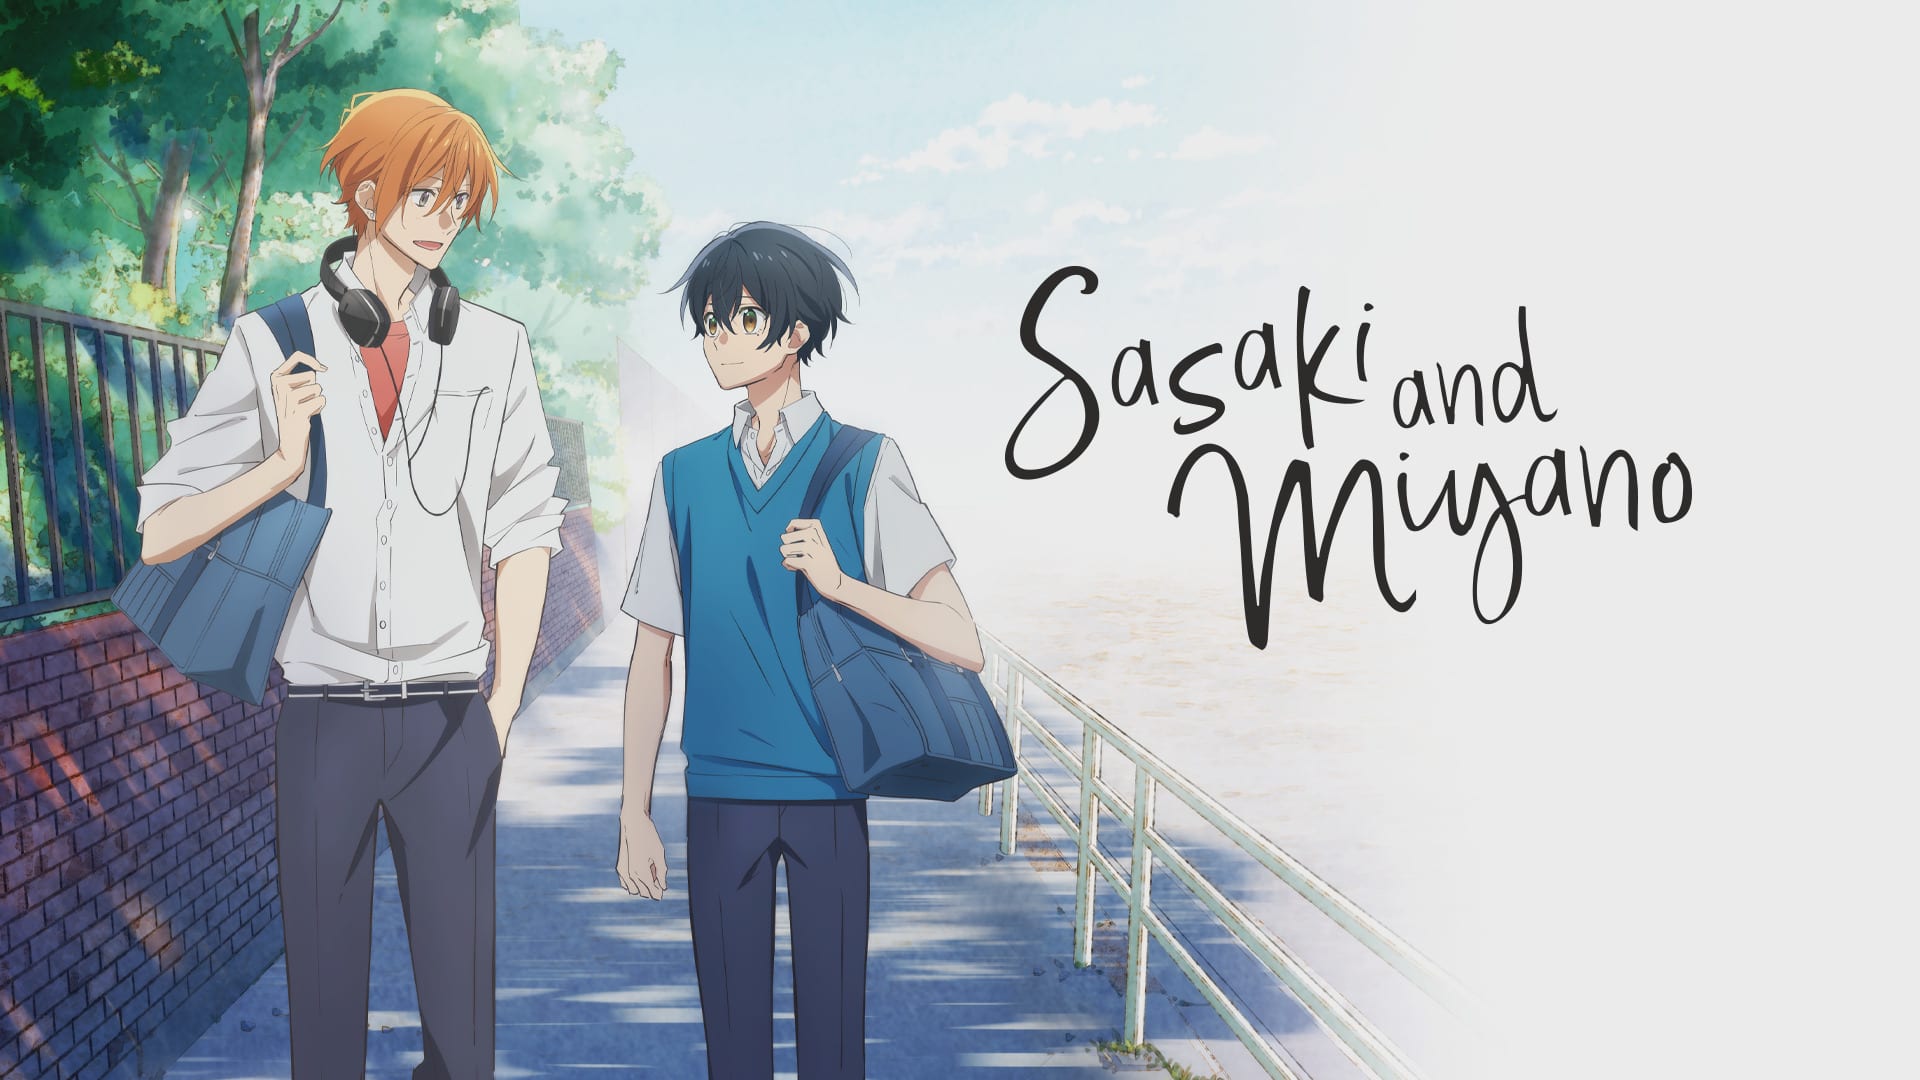 Sasaki and Miyano Anime Gets Film in 2023 That Will Screen